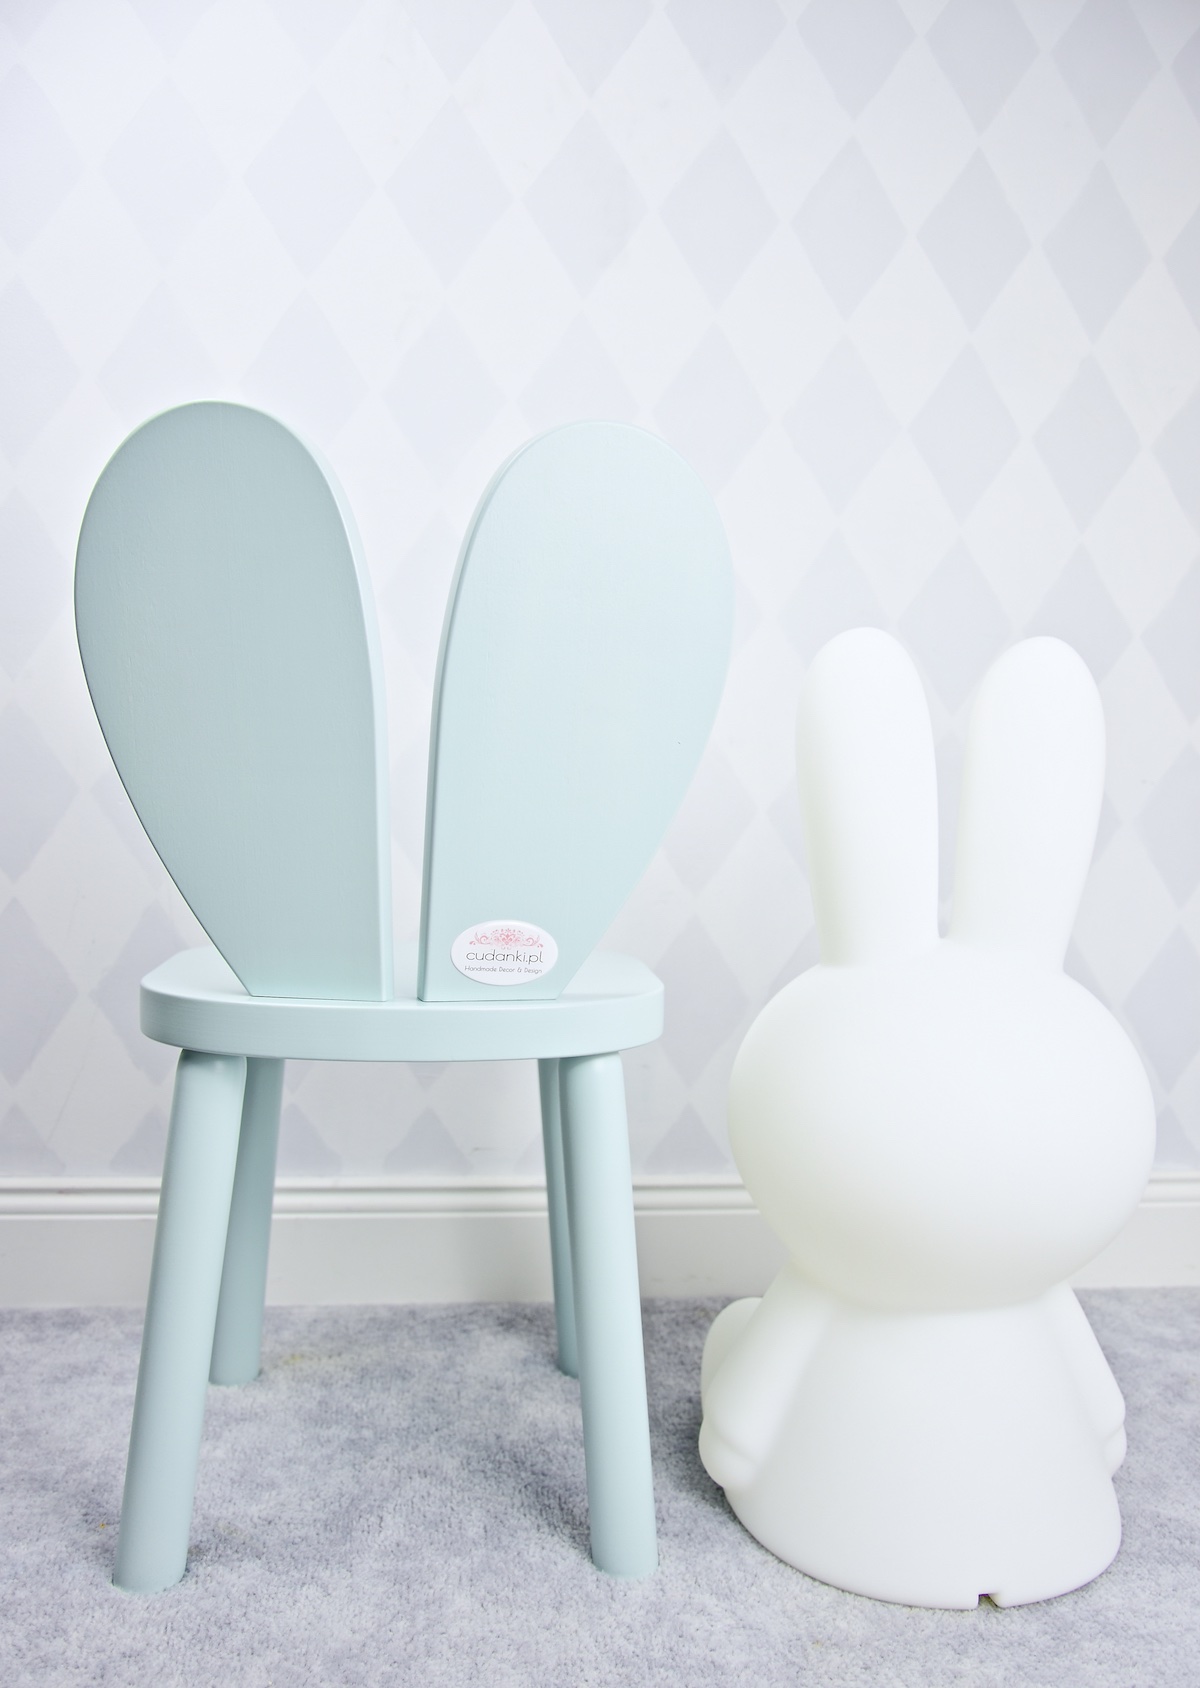 krzesło krzesełko królik rabiit chair heart serce